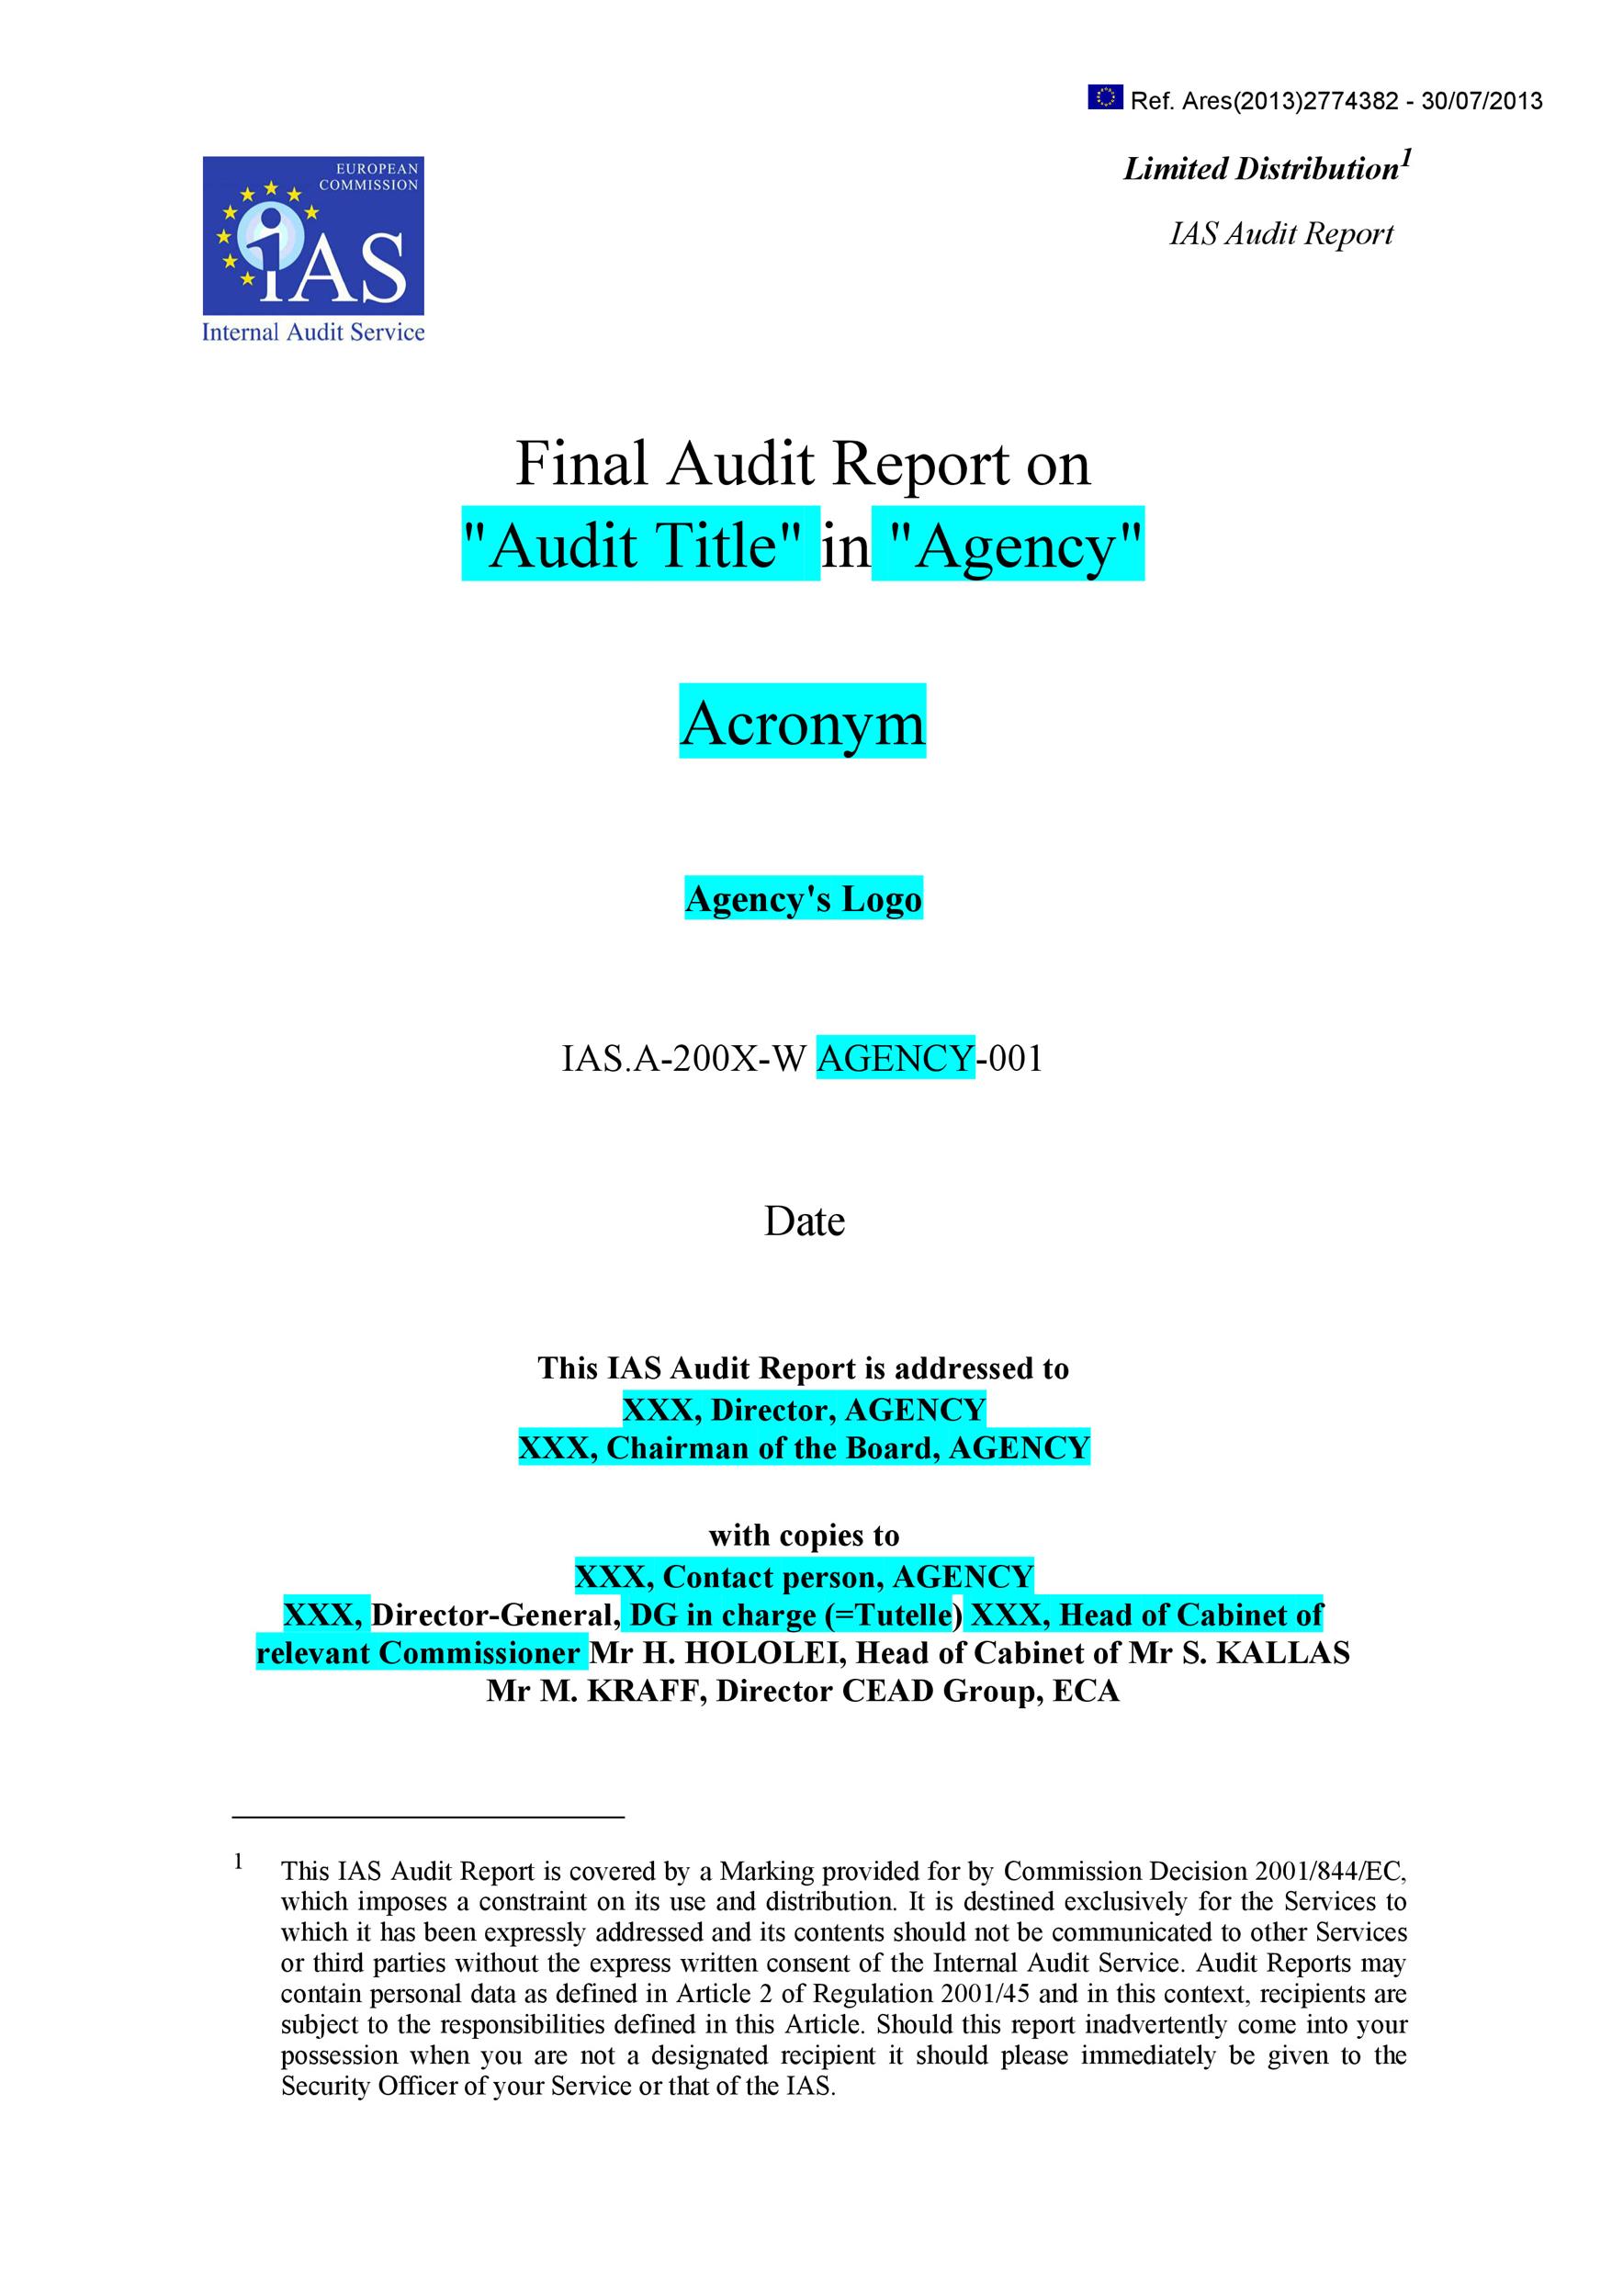 50-free-audit-report-templates-internal-audit-reports-templatelab